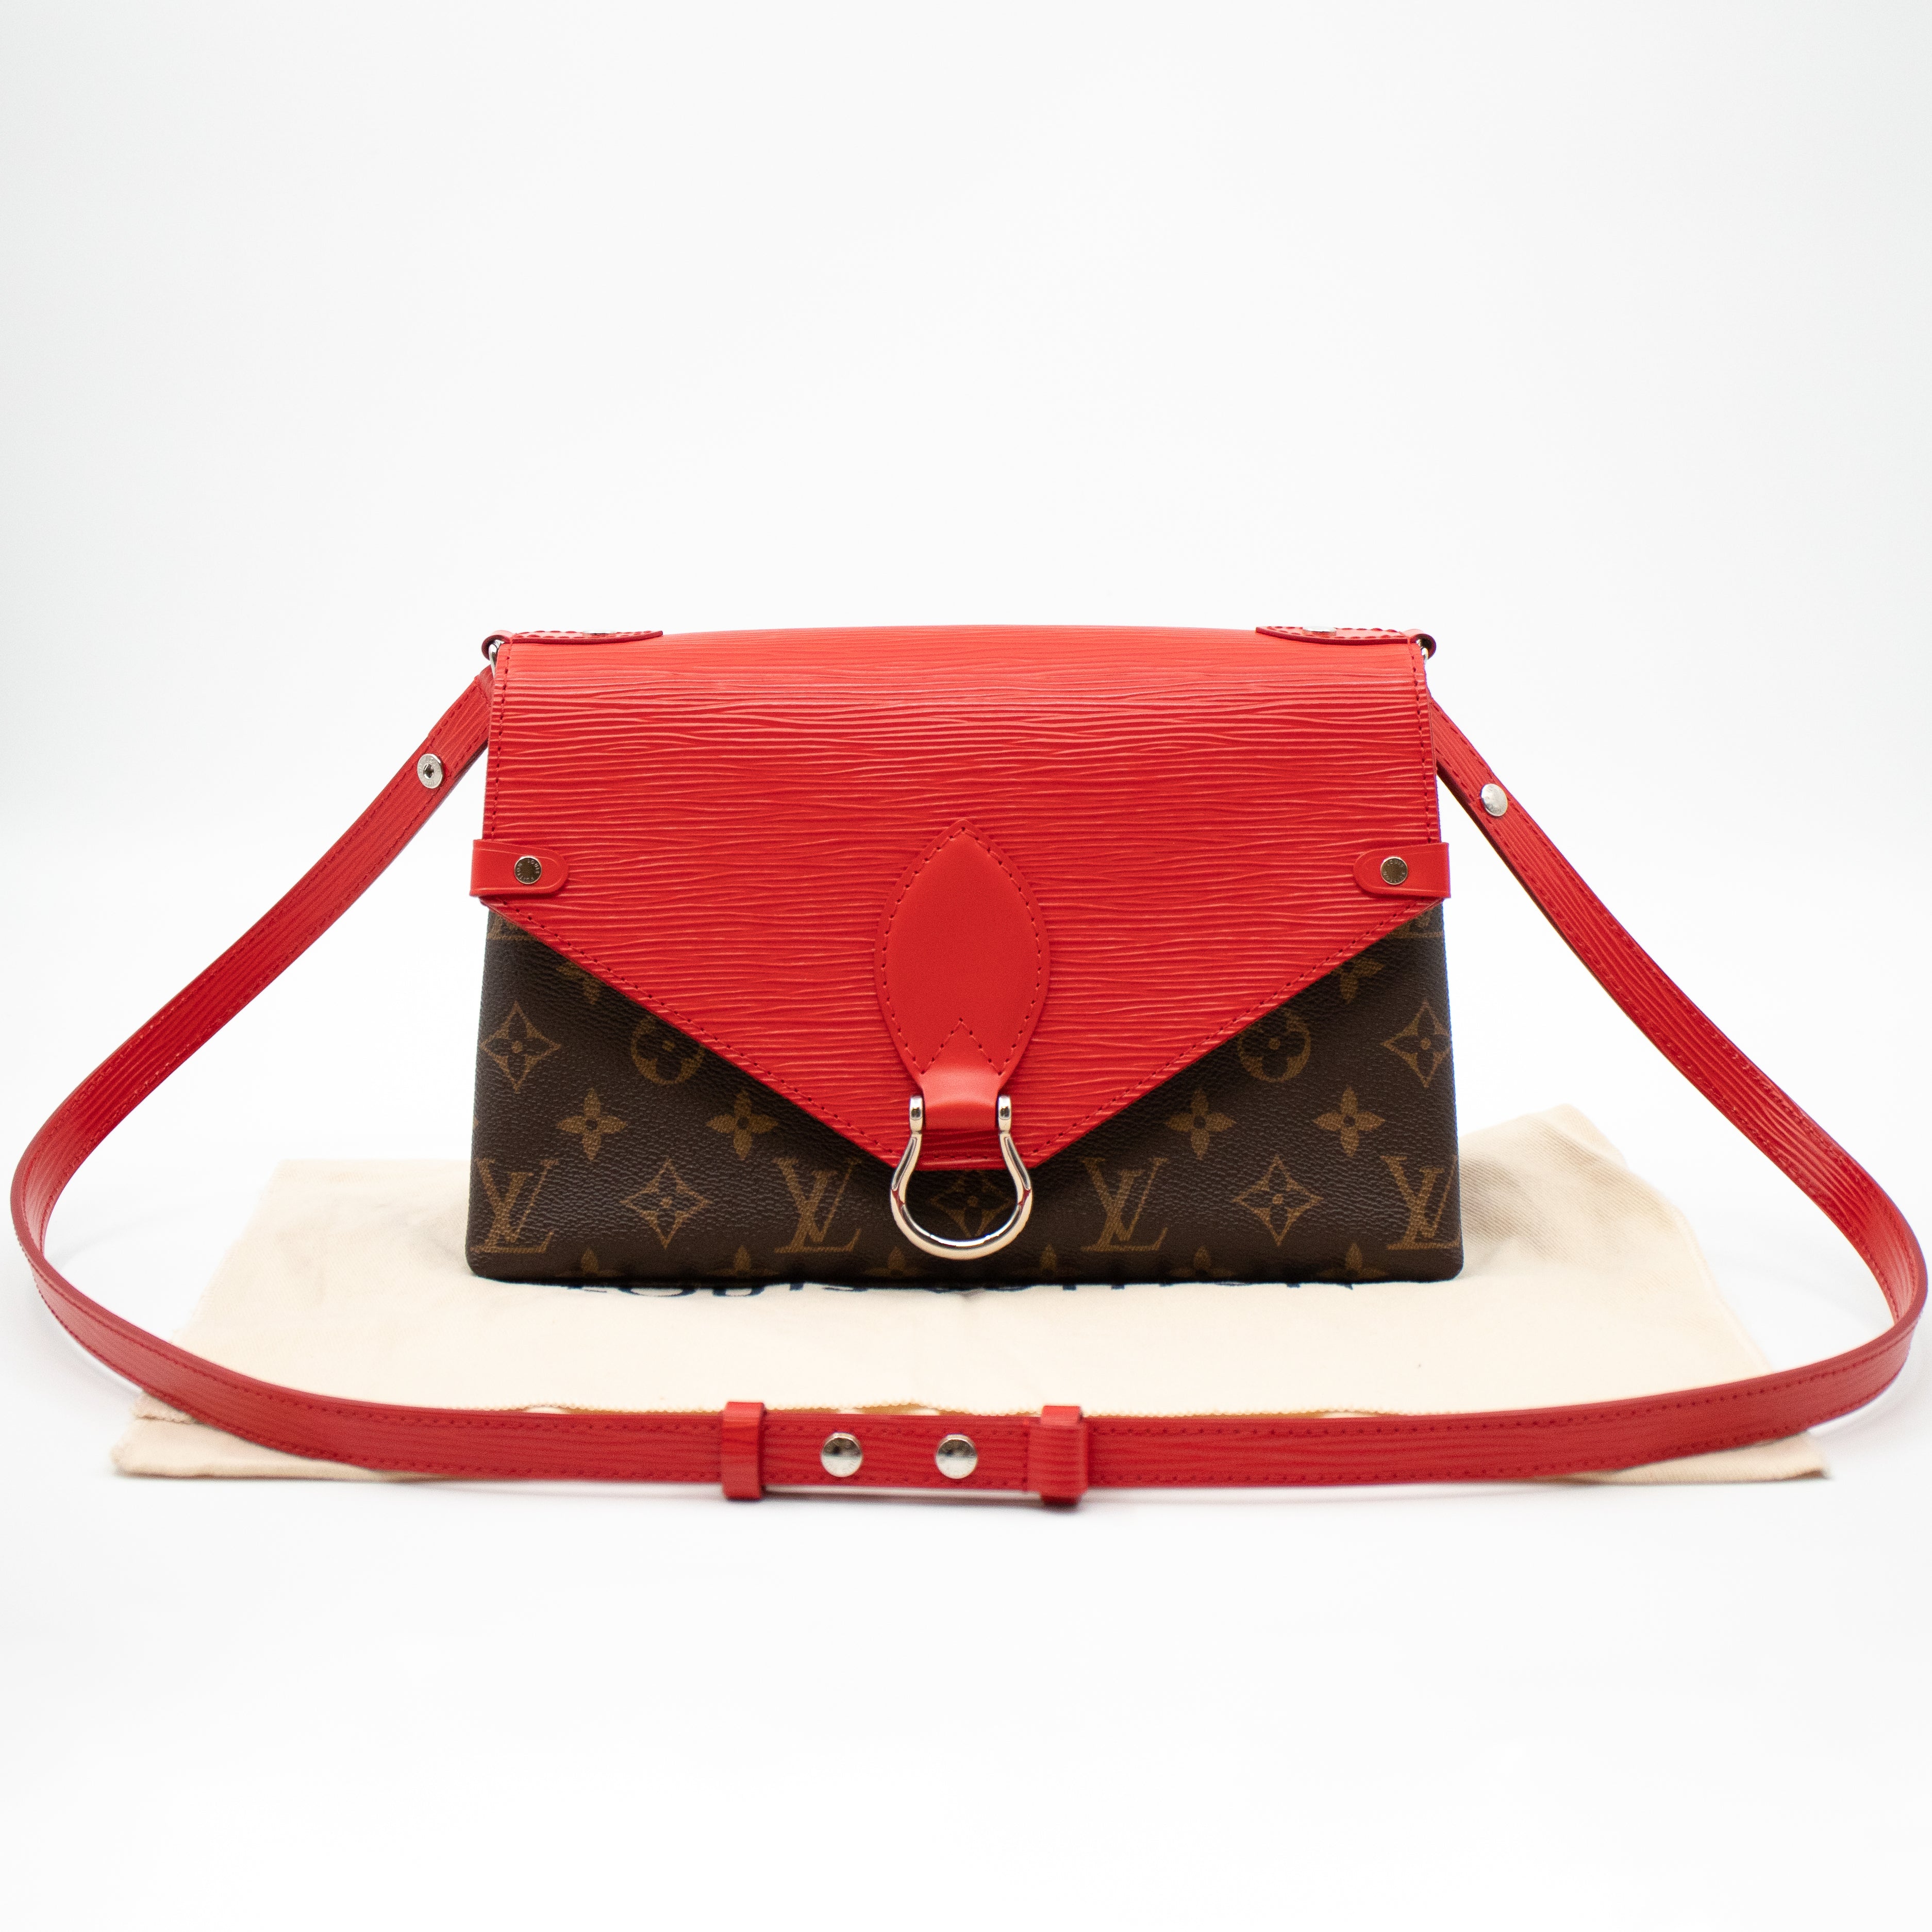 Saint michel leather handbag Louis Vuitton Brown in Leather - 30298720